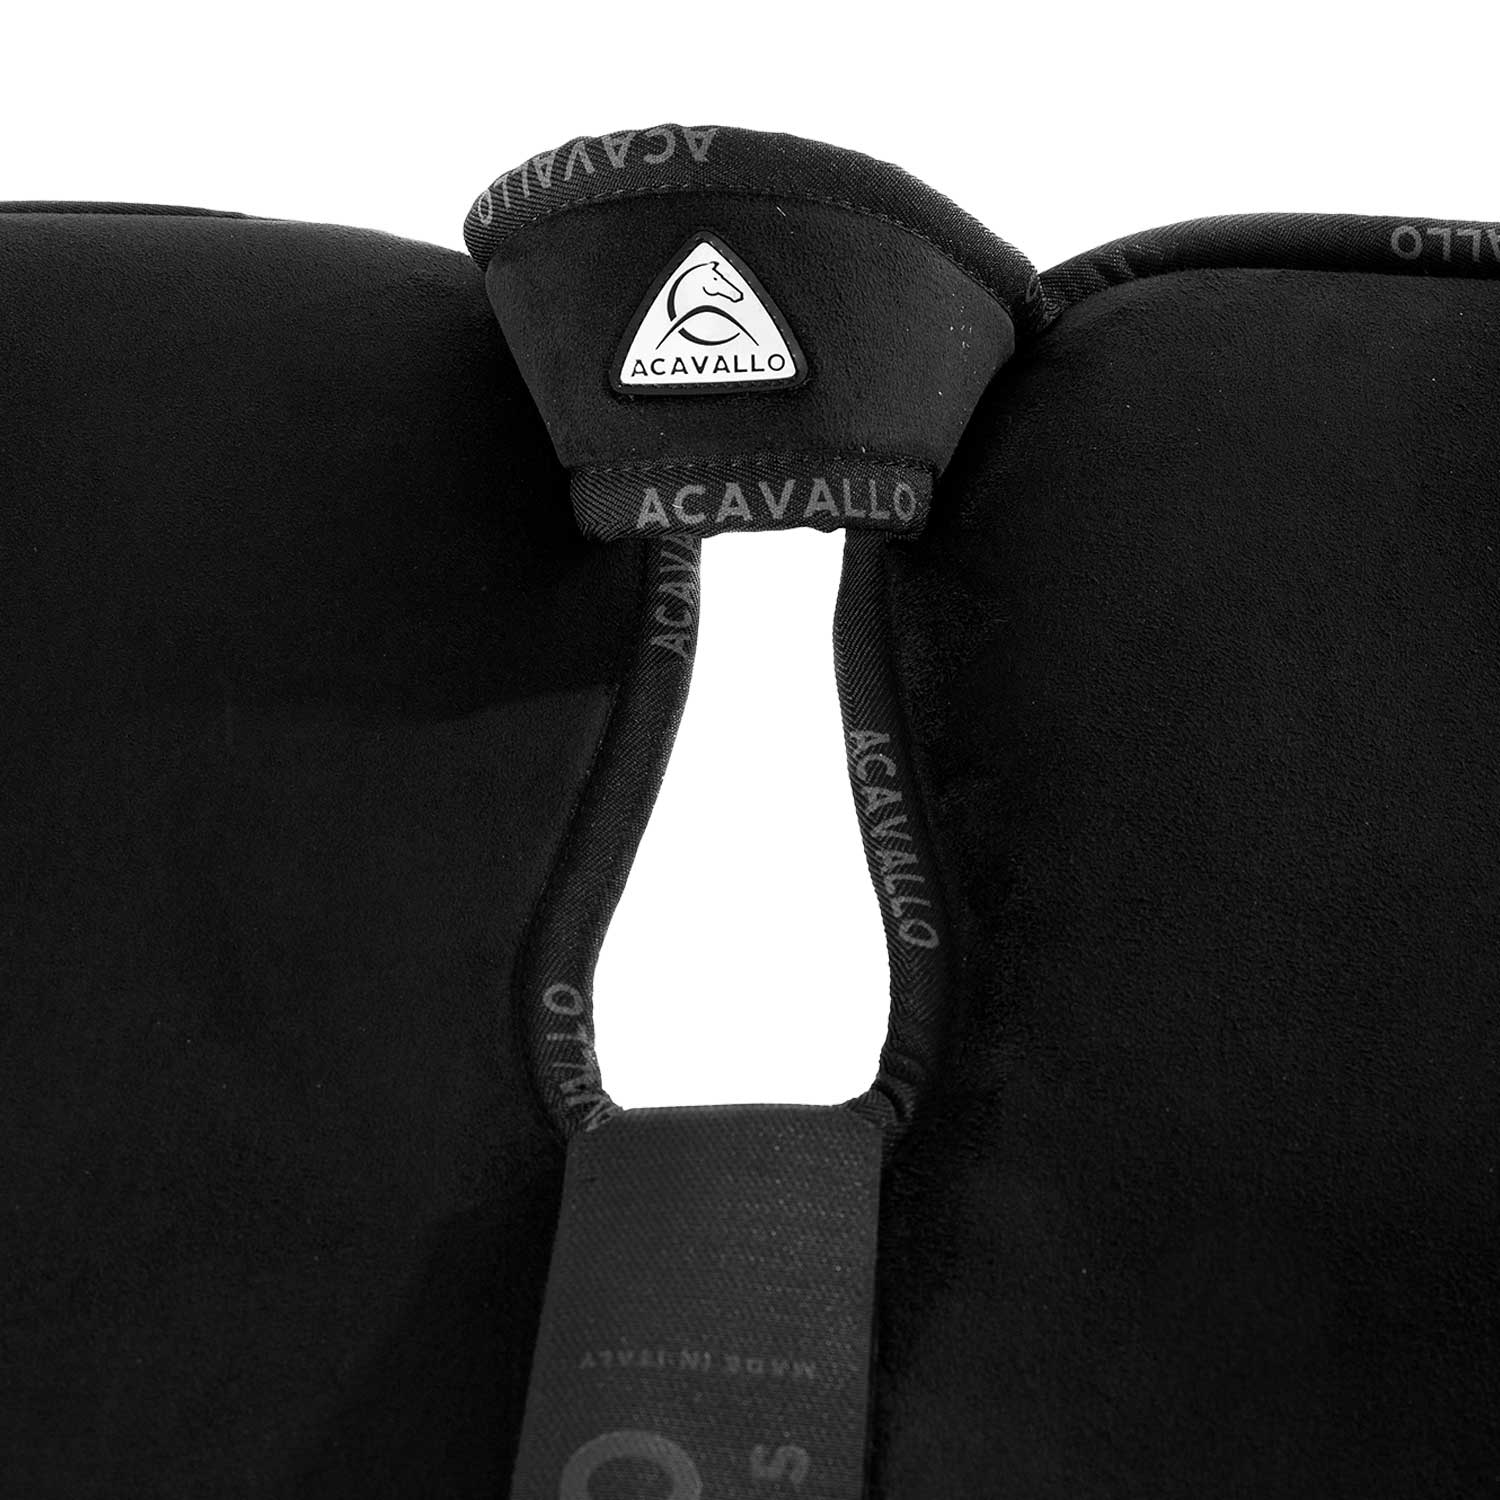 Acavallo lightweight breathable half pad